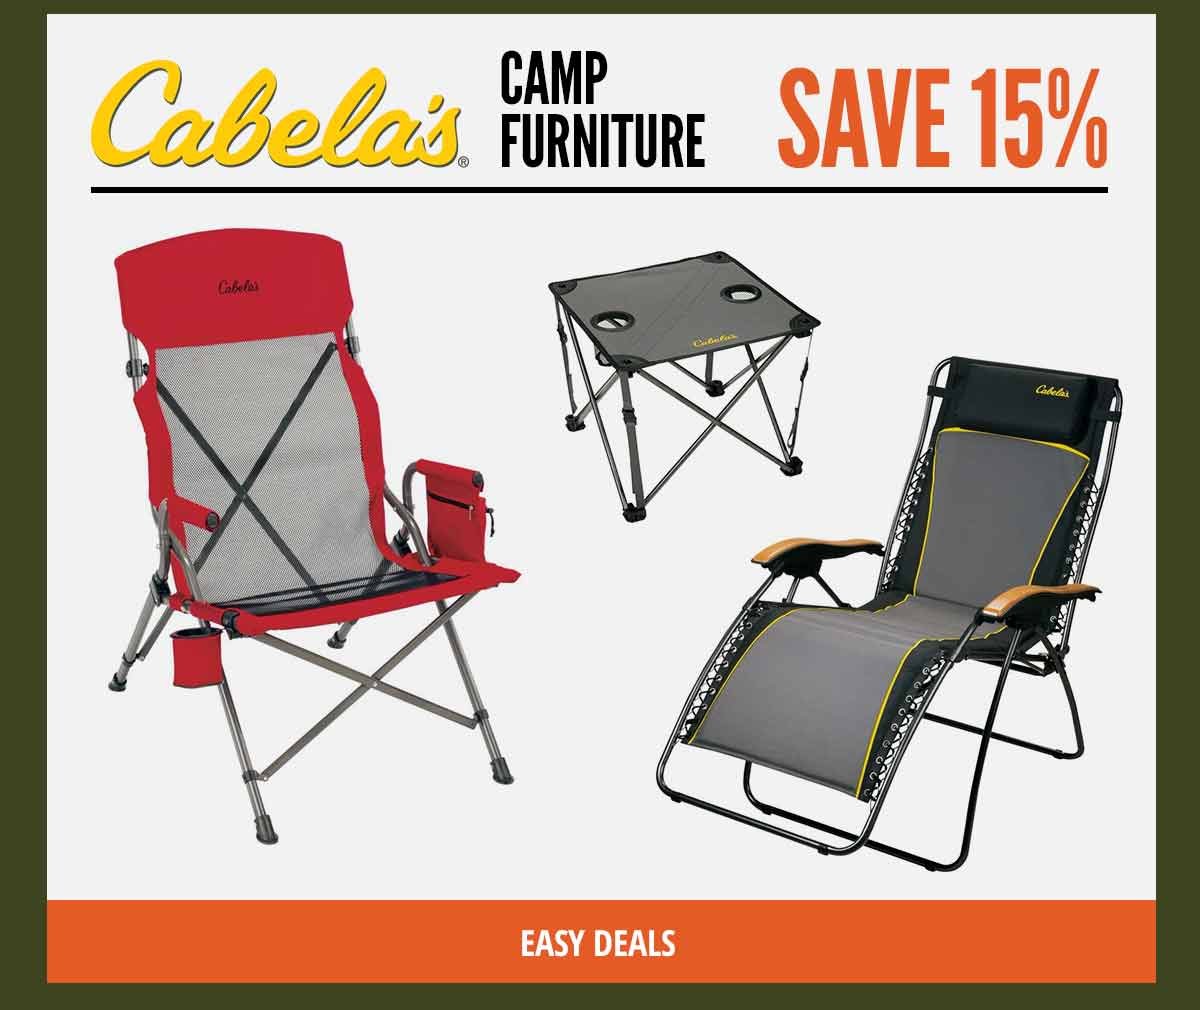 Cabela's Camp Furniture | Save 15%